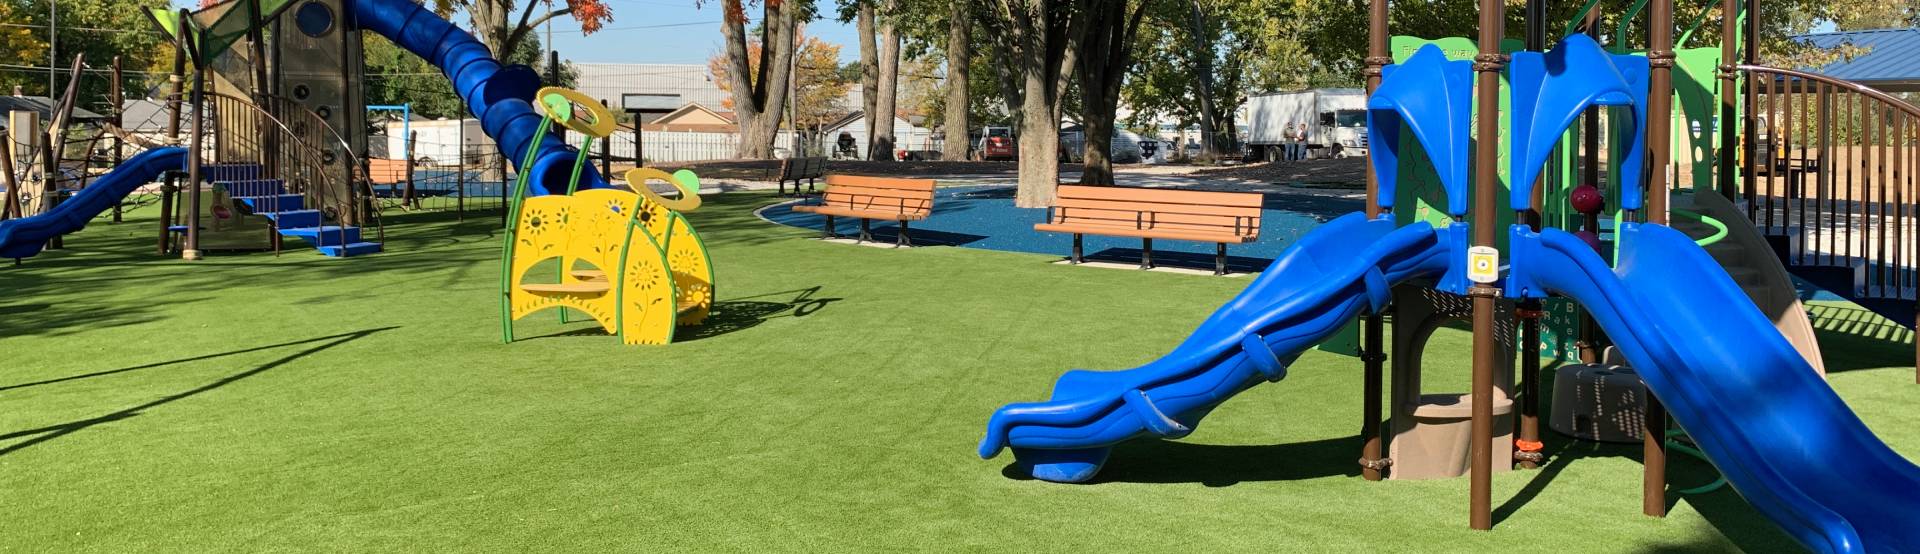 blue slides on artificial grass at sandorf park